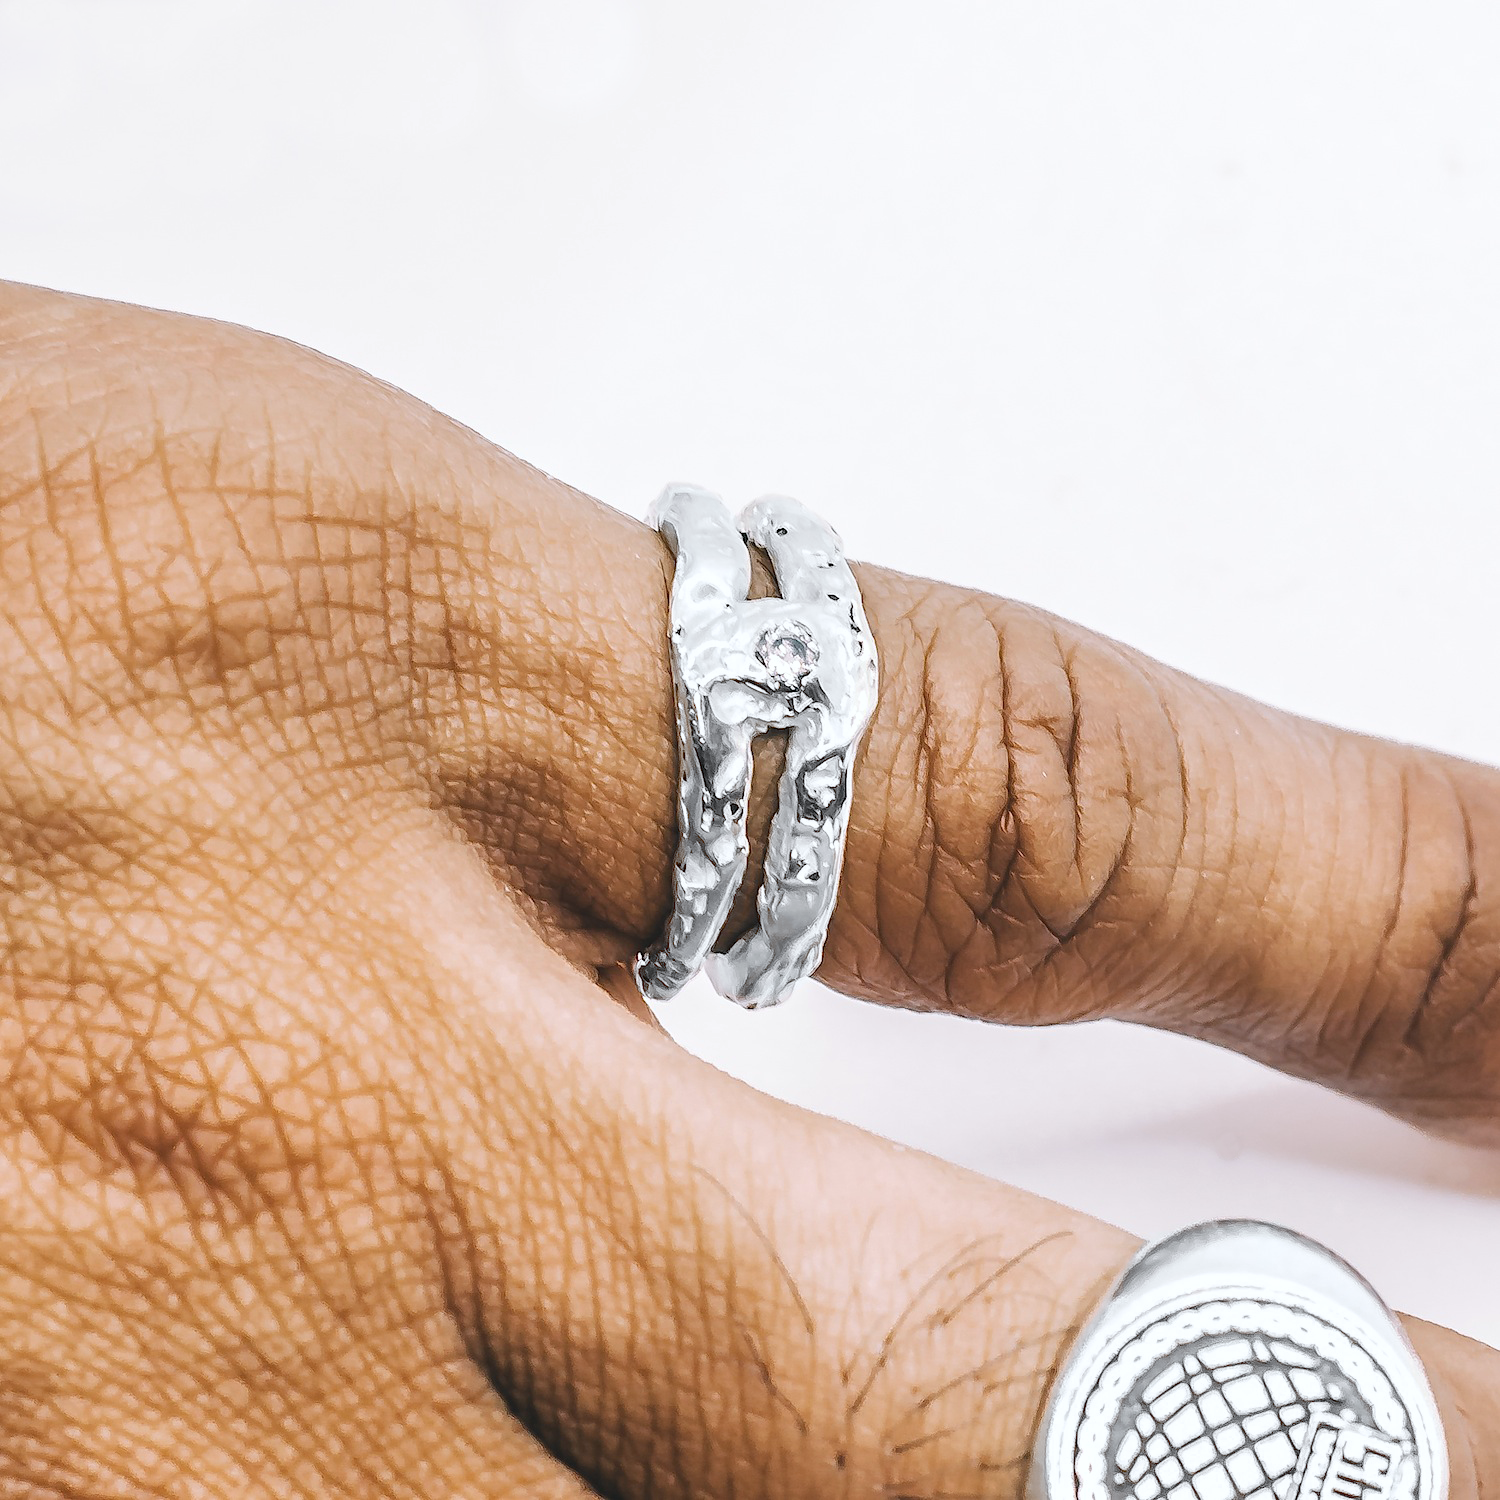 Dual Band Textured Gemstone Ring